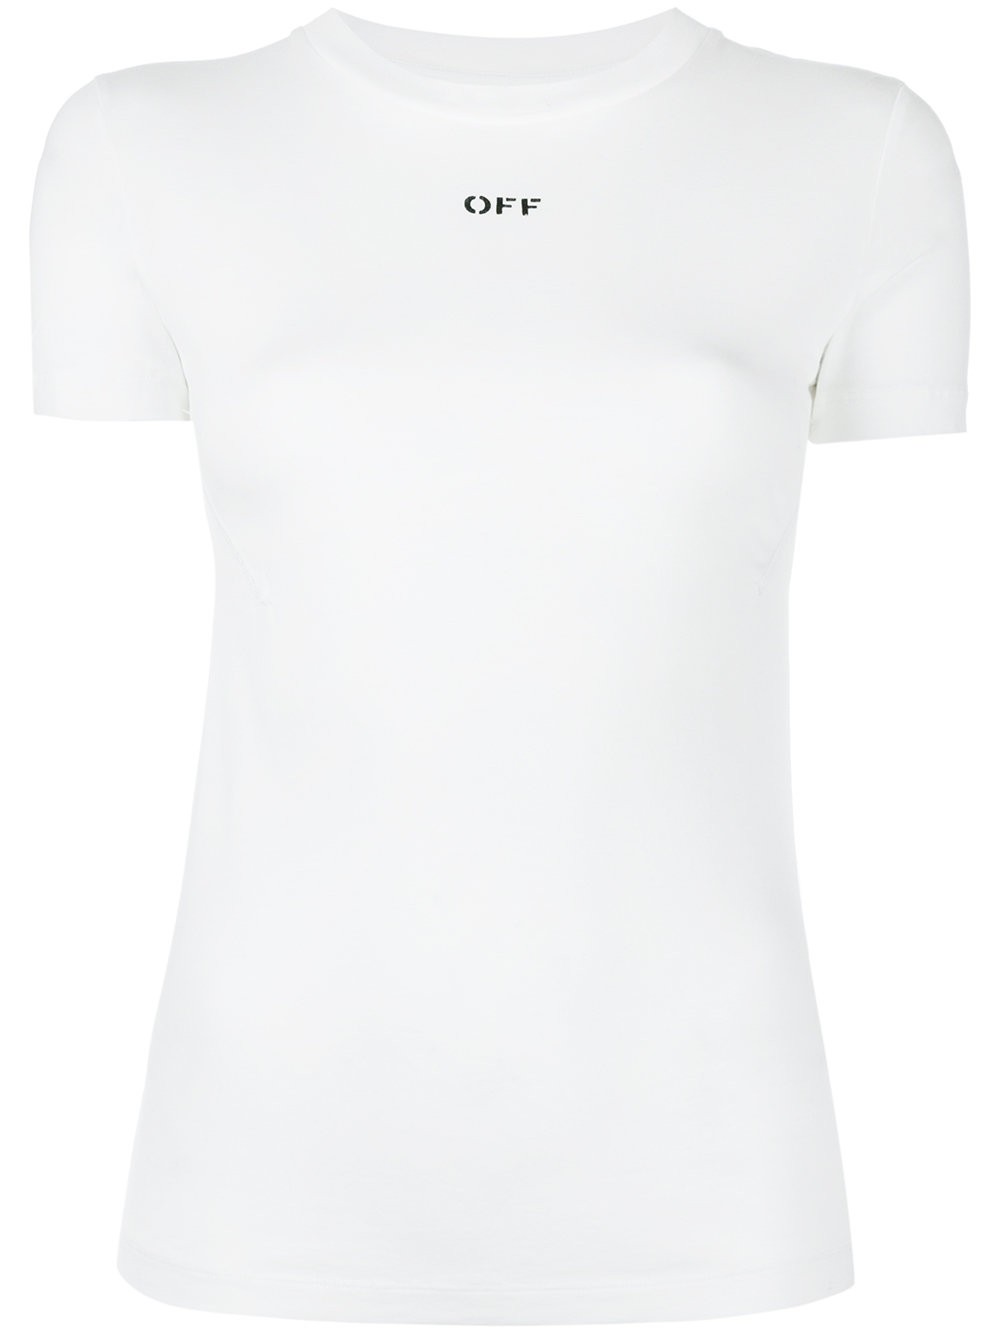 Off-White OFF T-shirt world-wide renown WHITE Women Clothing T-shirts & Jerseys